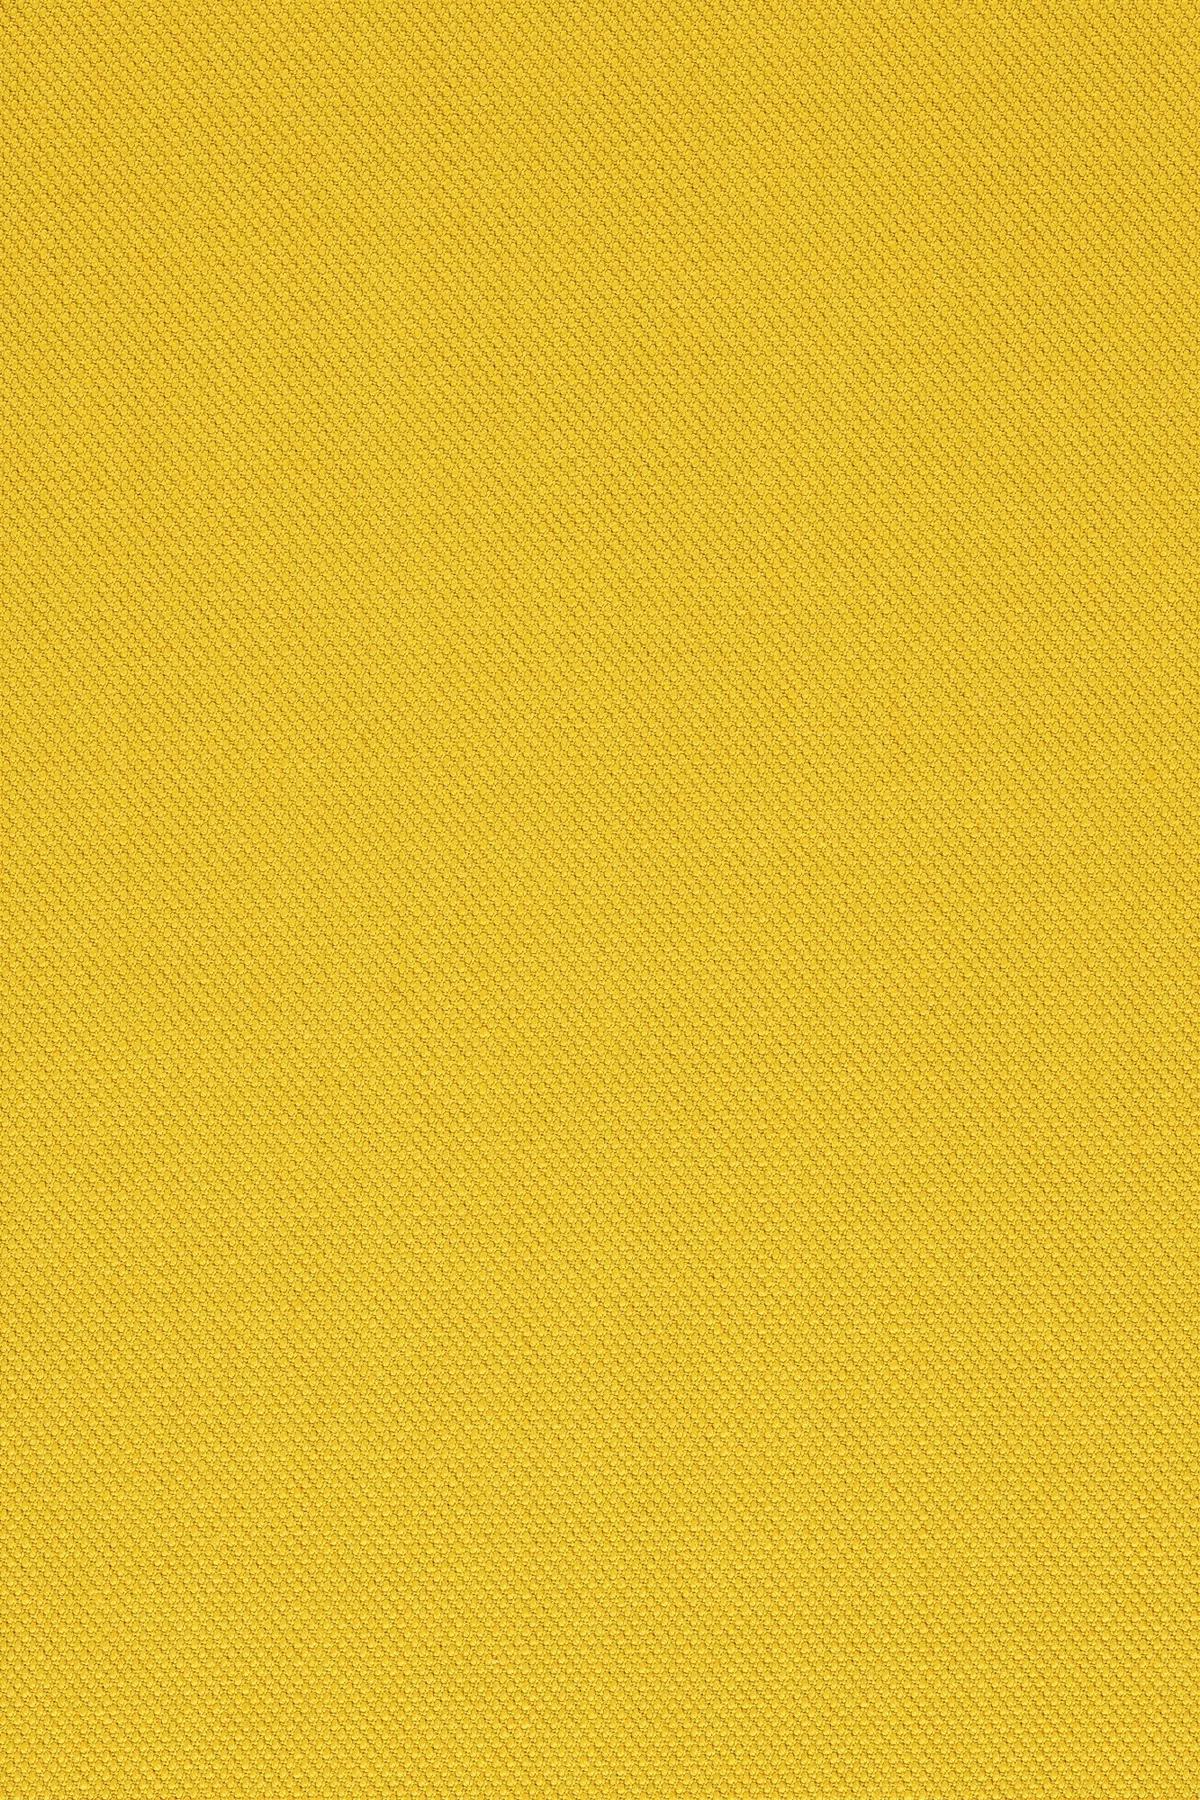 Fabric sample Steelcut Trio 3 446 yellow